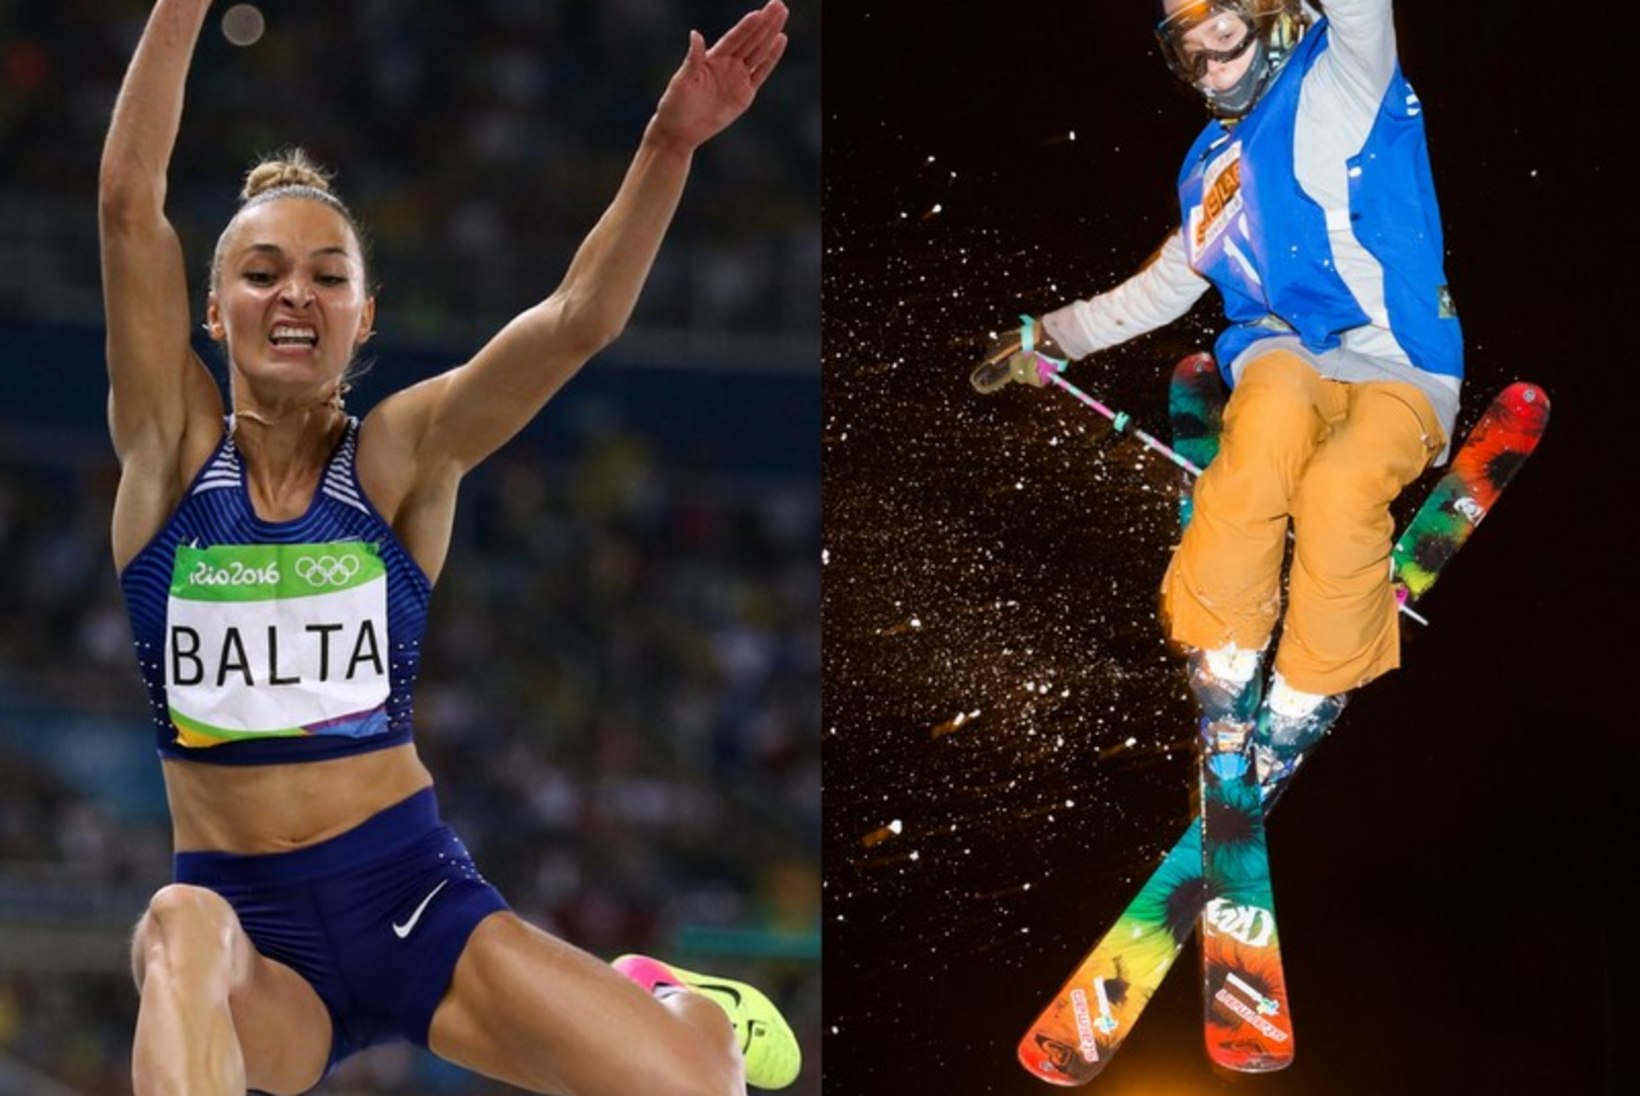 Ksenija Balta versus Kelly Sildaru – kumb on Eesti parim naissportlane?